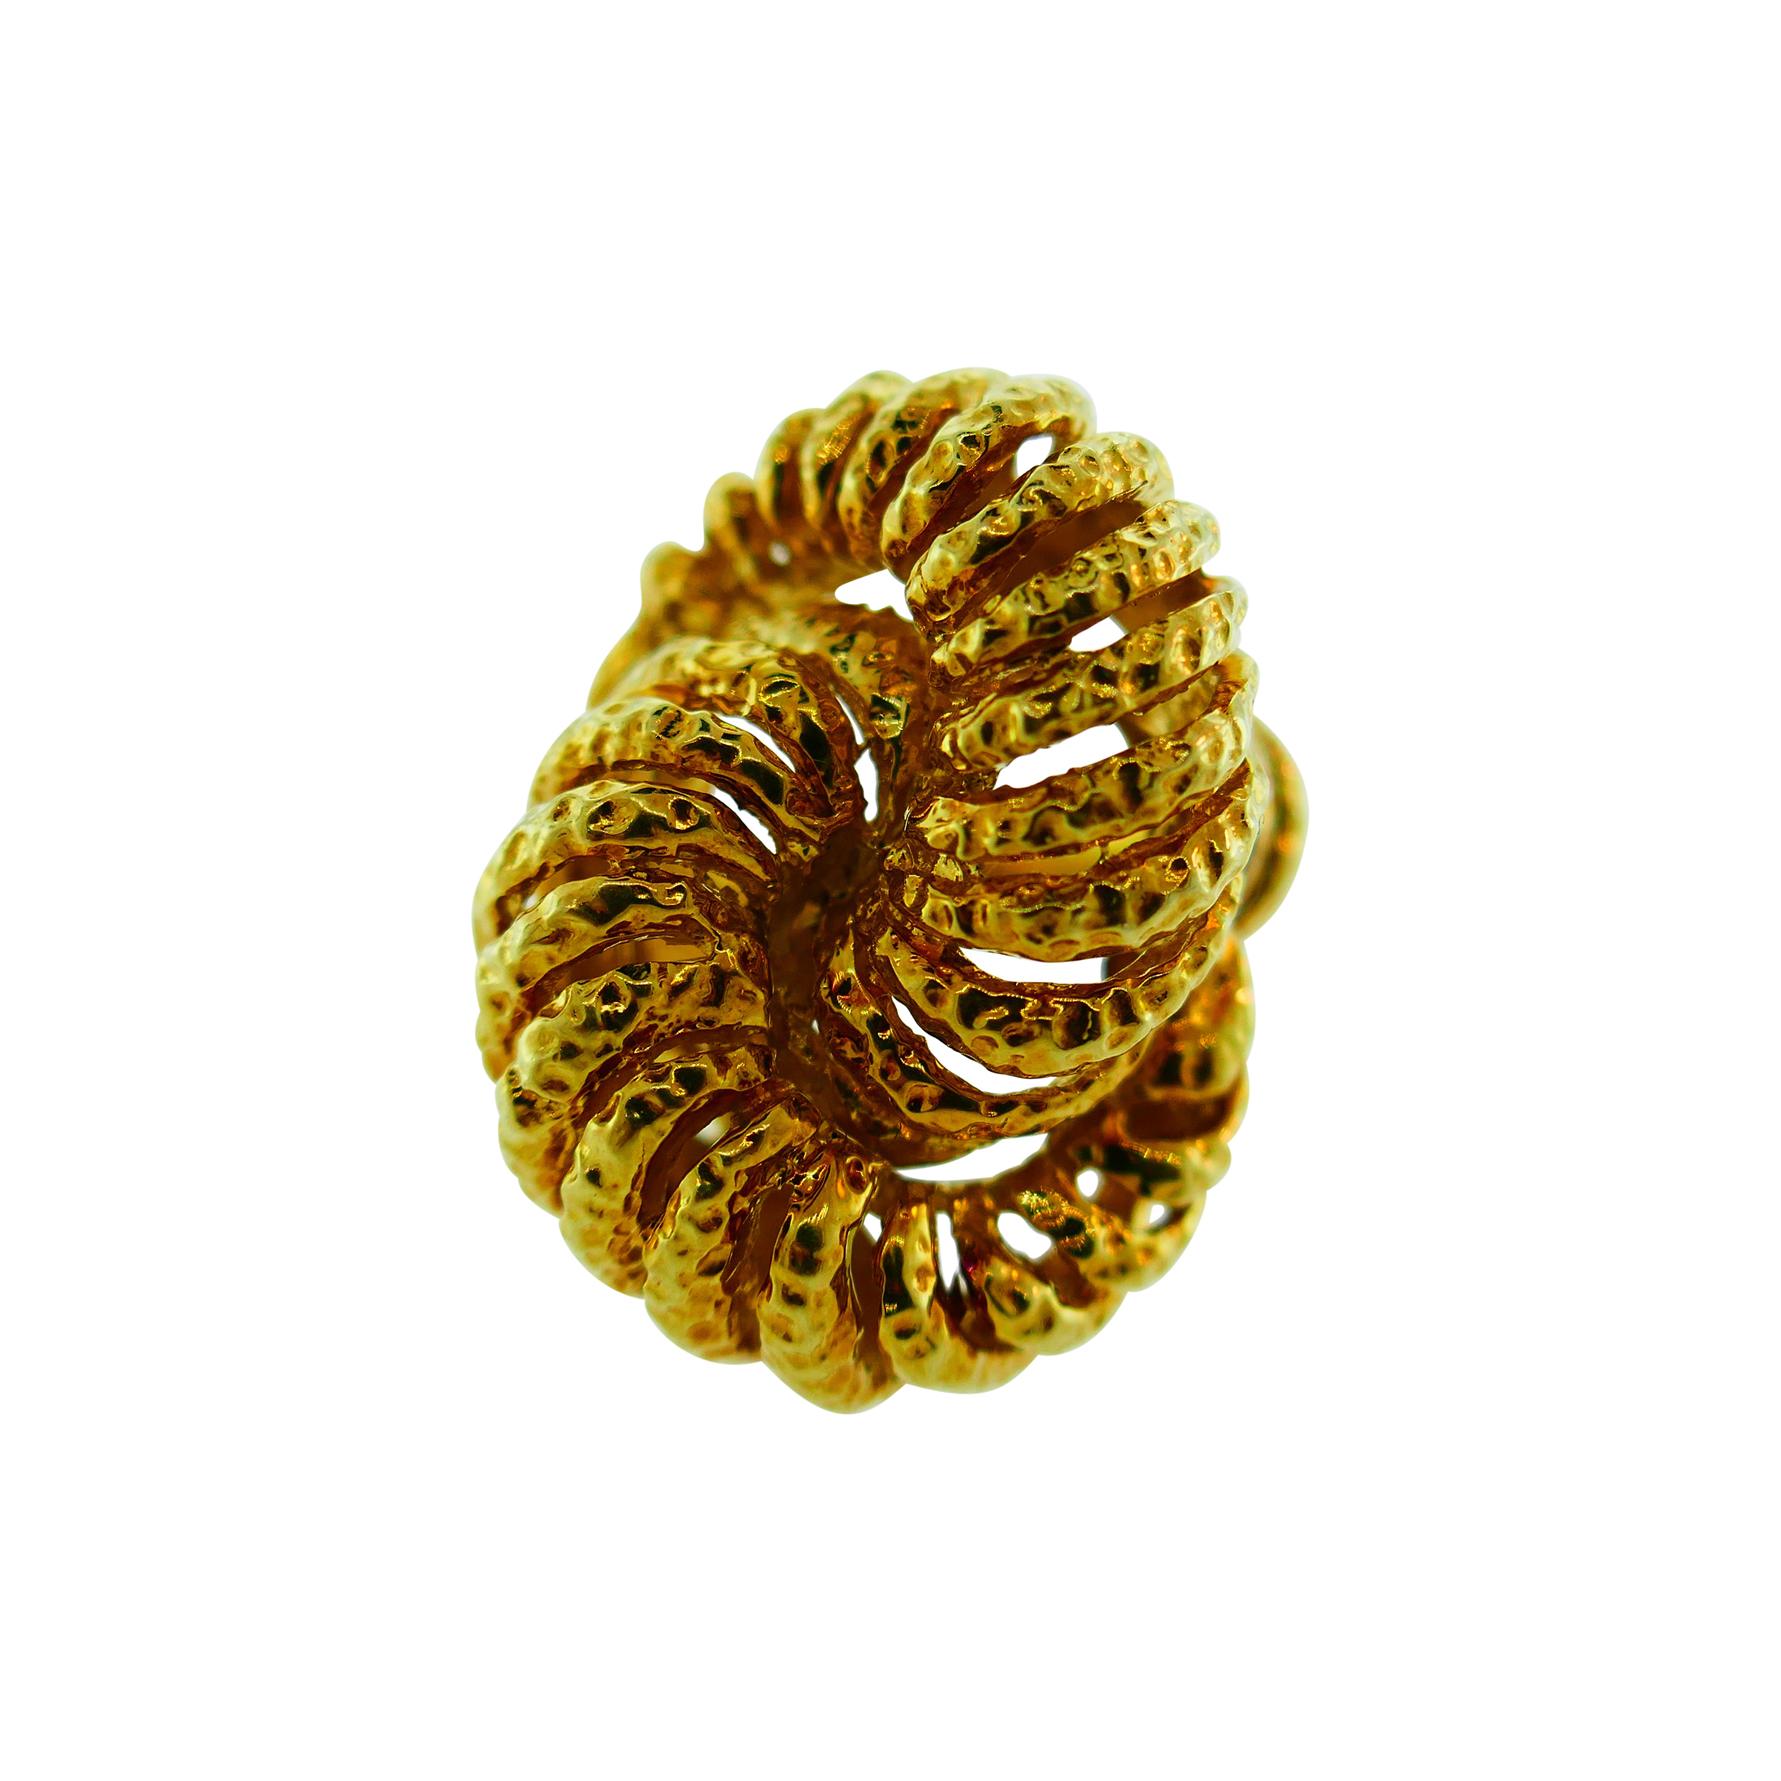 Van Cleef & Arpels Paris 18k Hammered Yellow Gold Knot Ring Vintage, circa 1980s